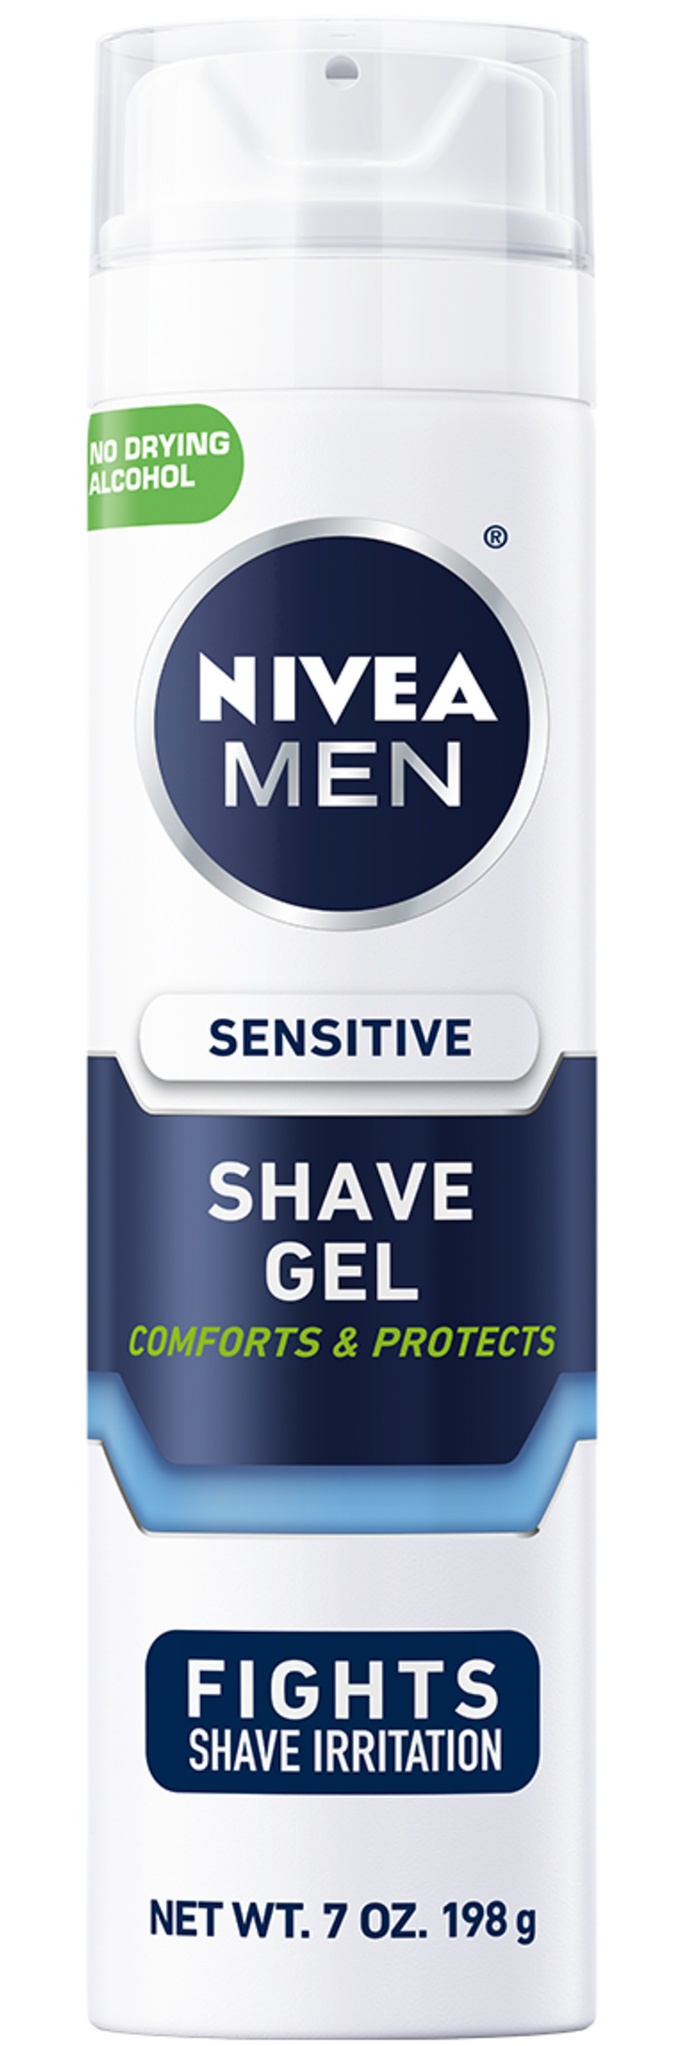 NIVEA MEN Sensitive Shave Gel